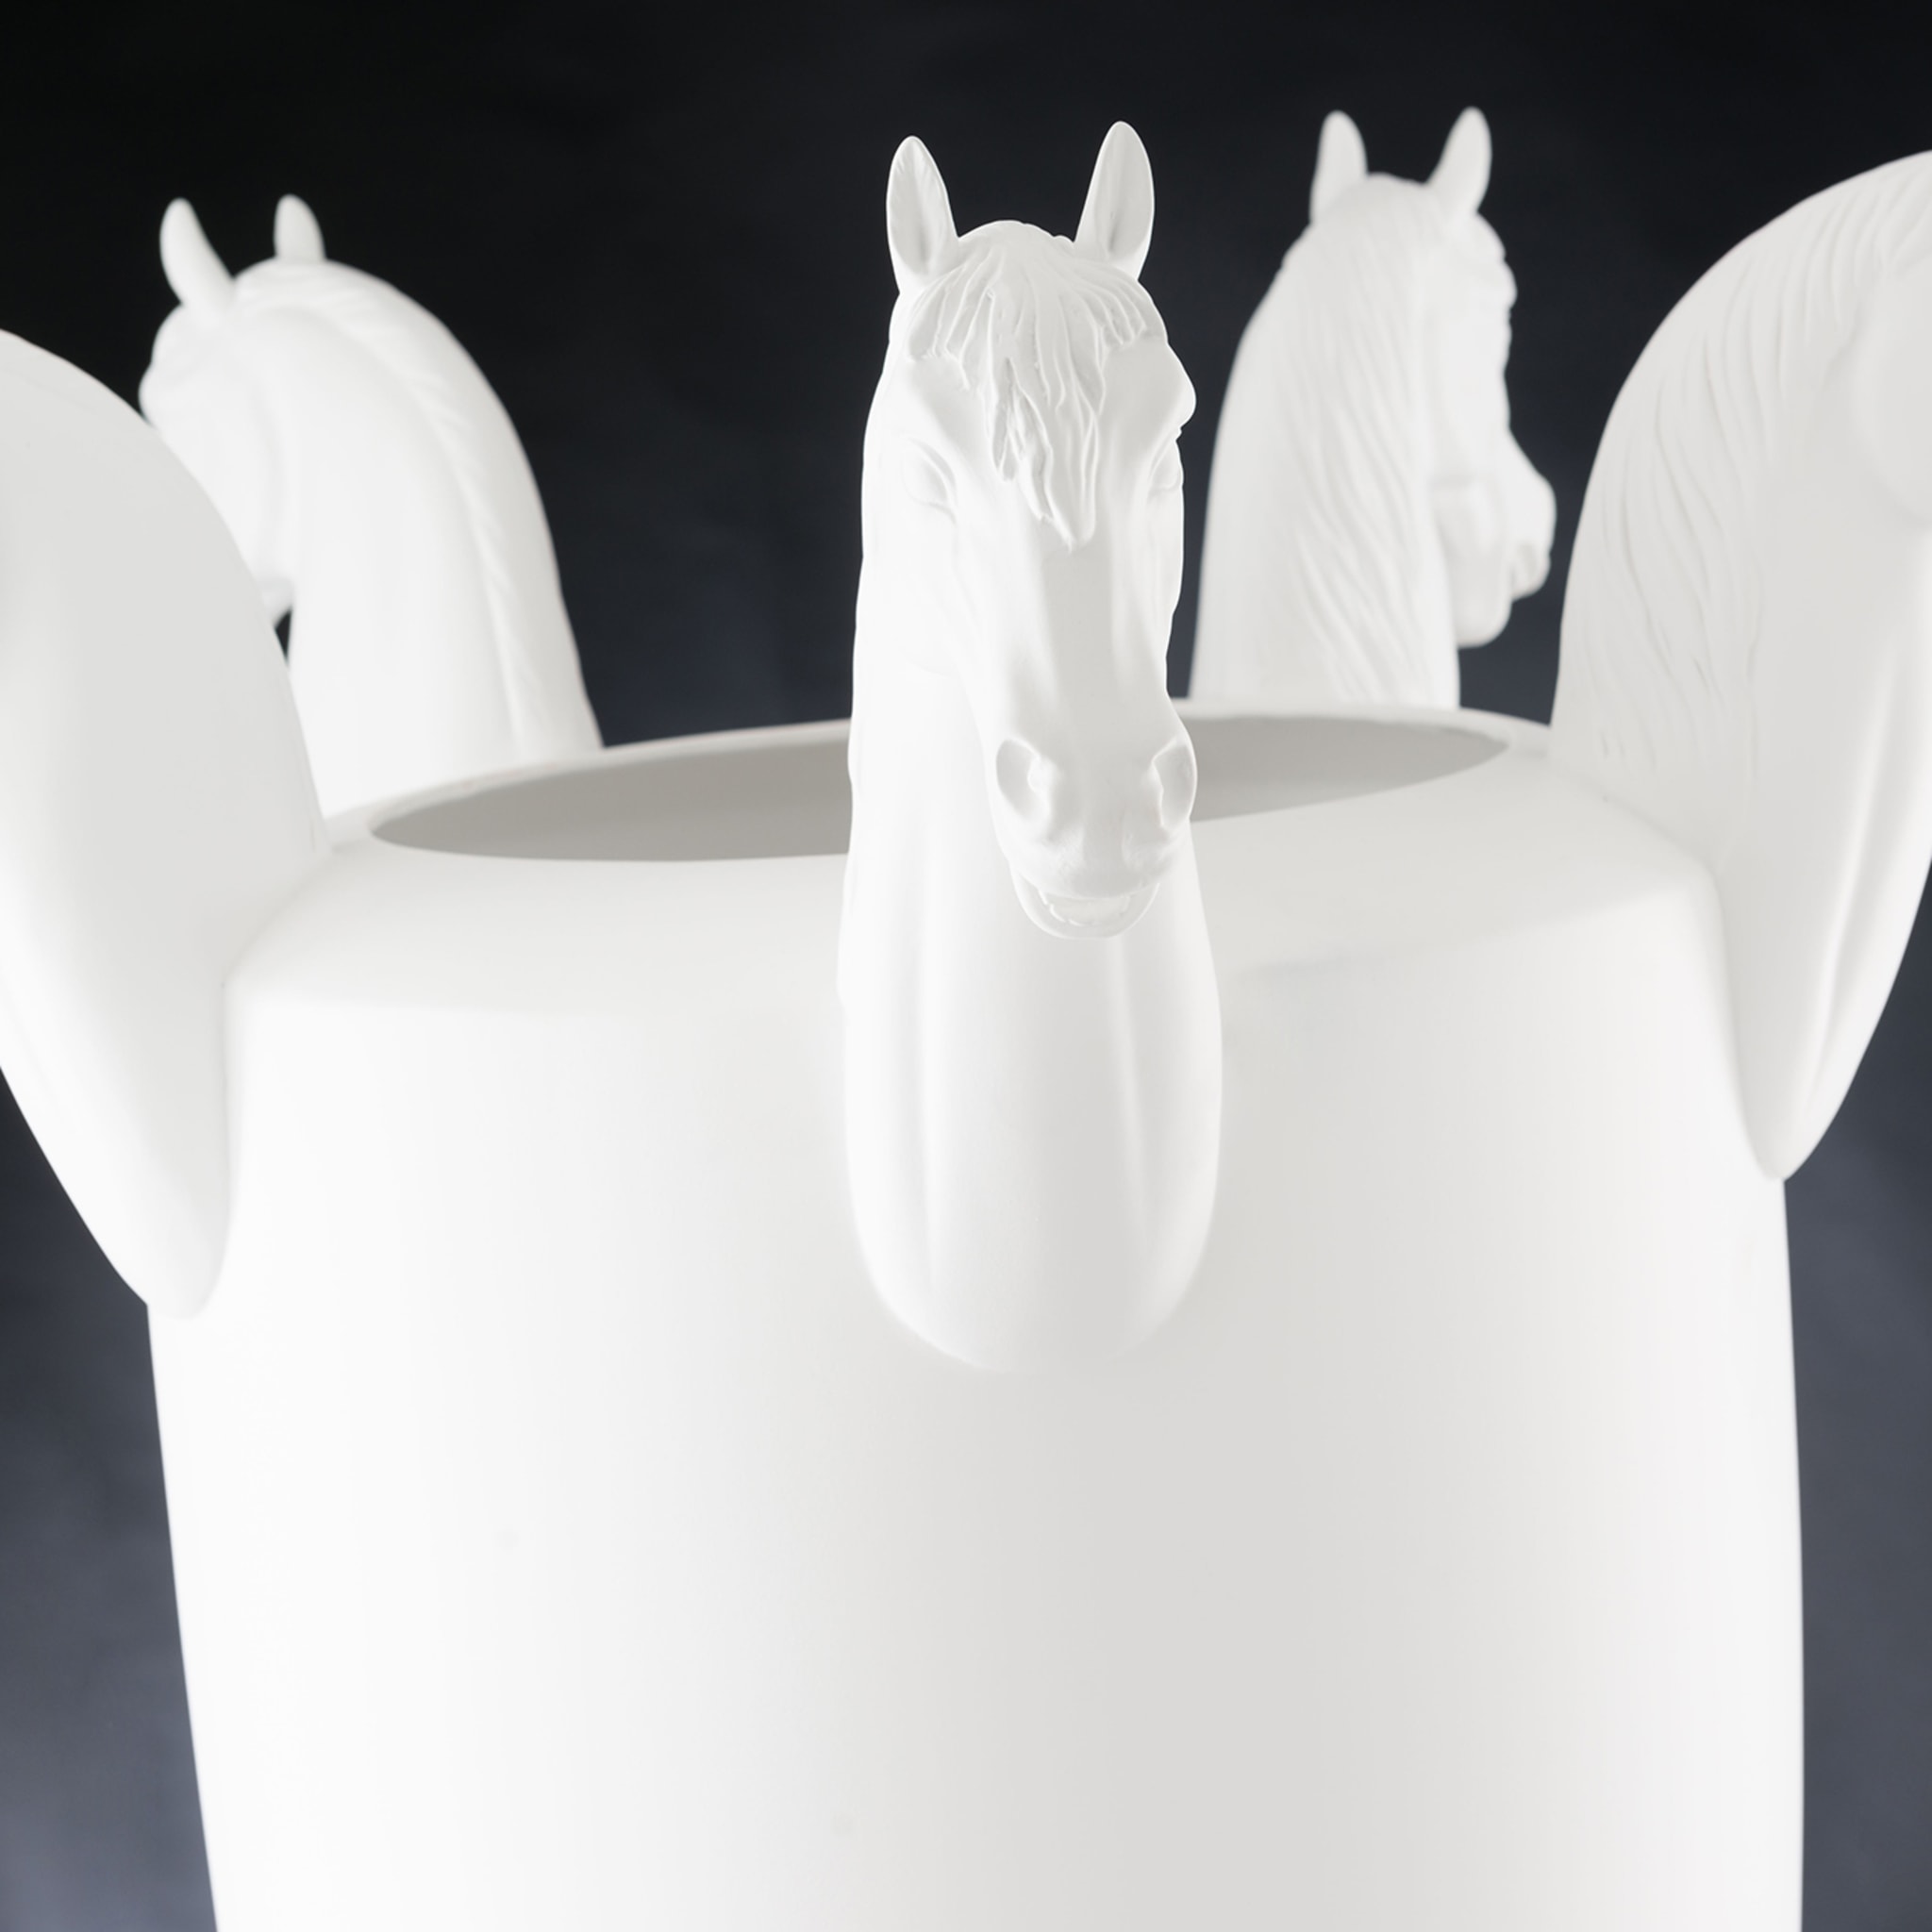 Obice Horse 5 Heads White Decorative Vase - Alternative view 1